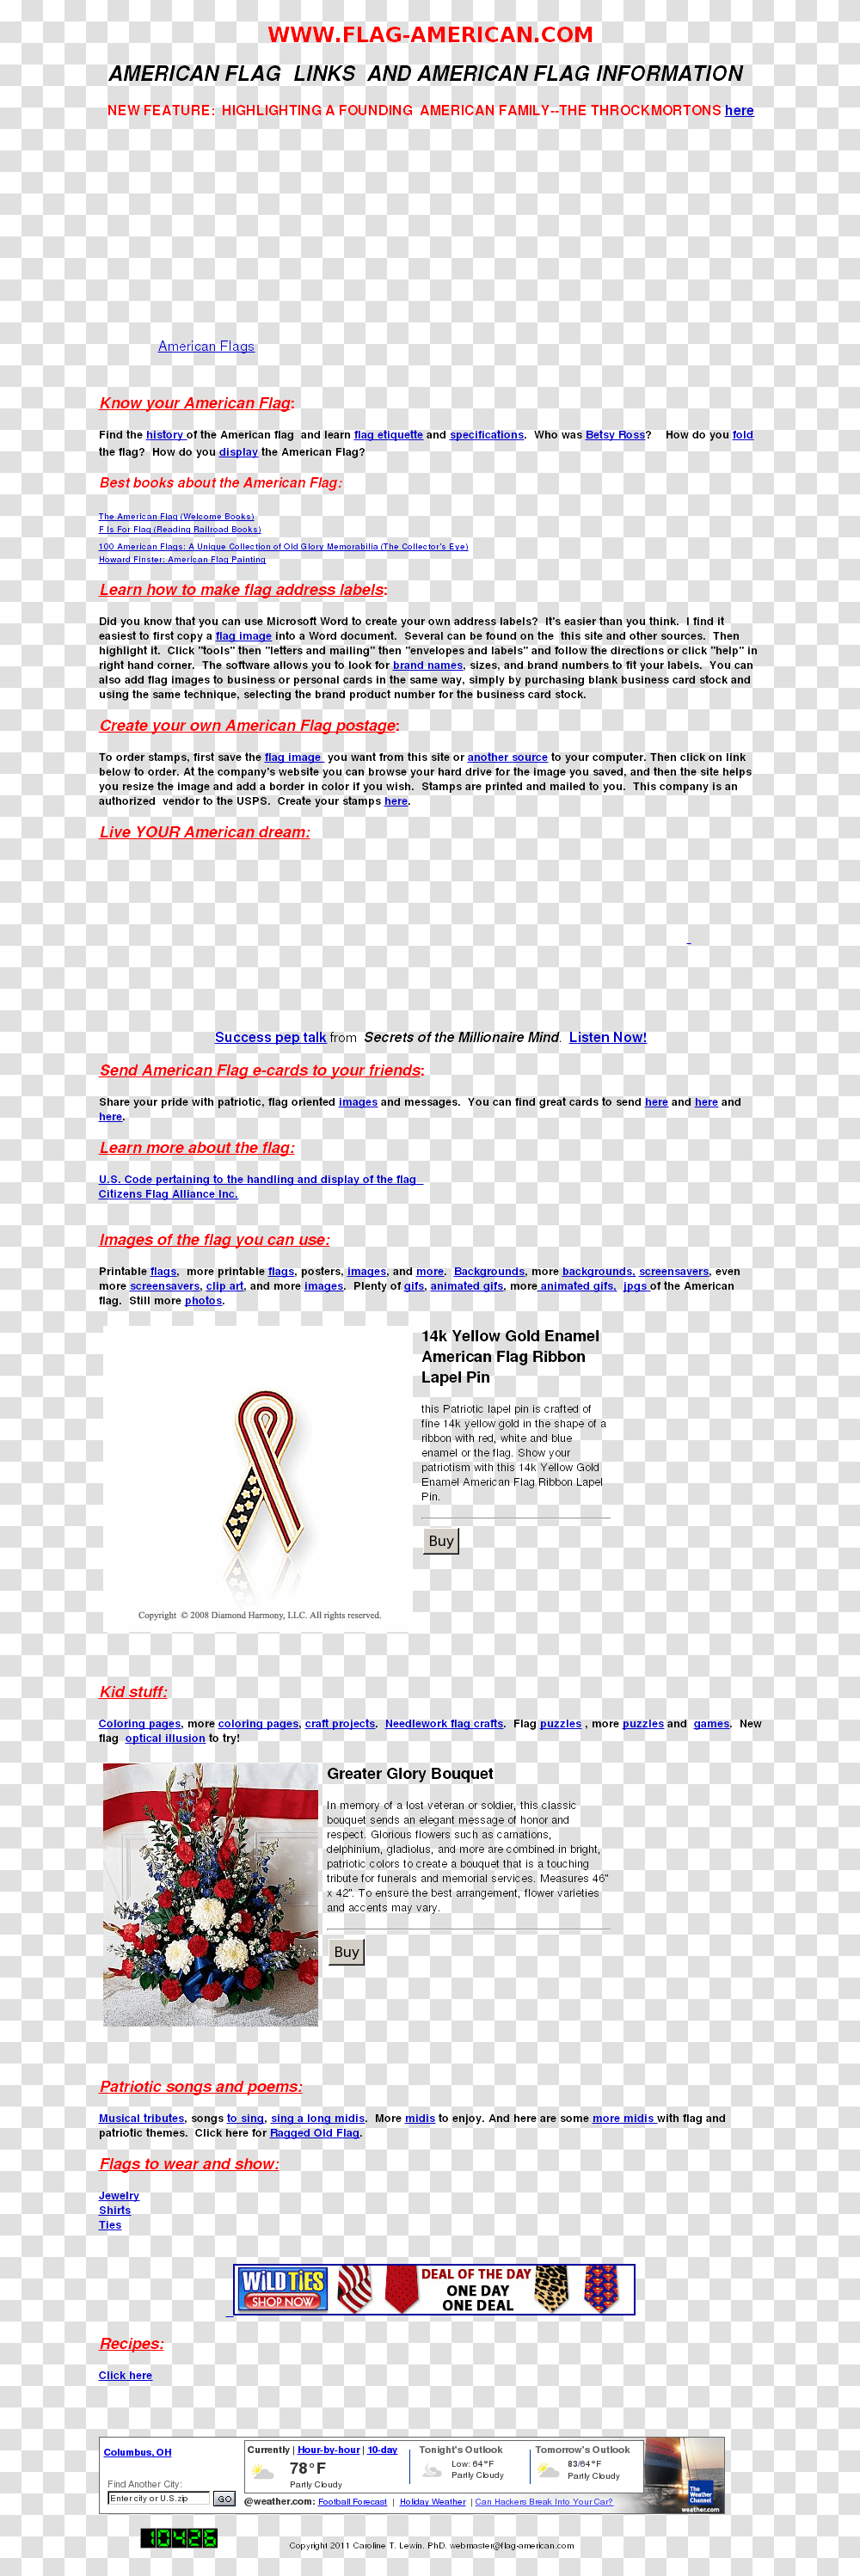 American Flag Pin Flower Arrangements, File, Page, Webpage Transparent Png